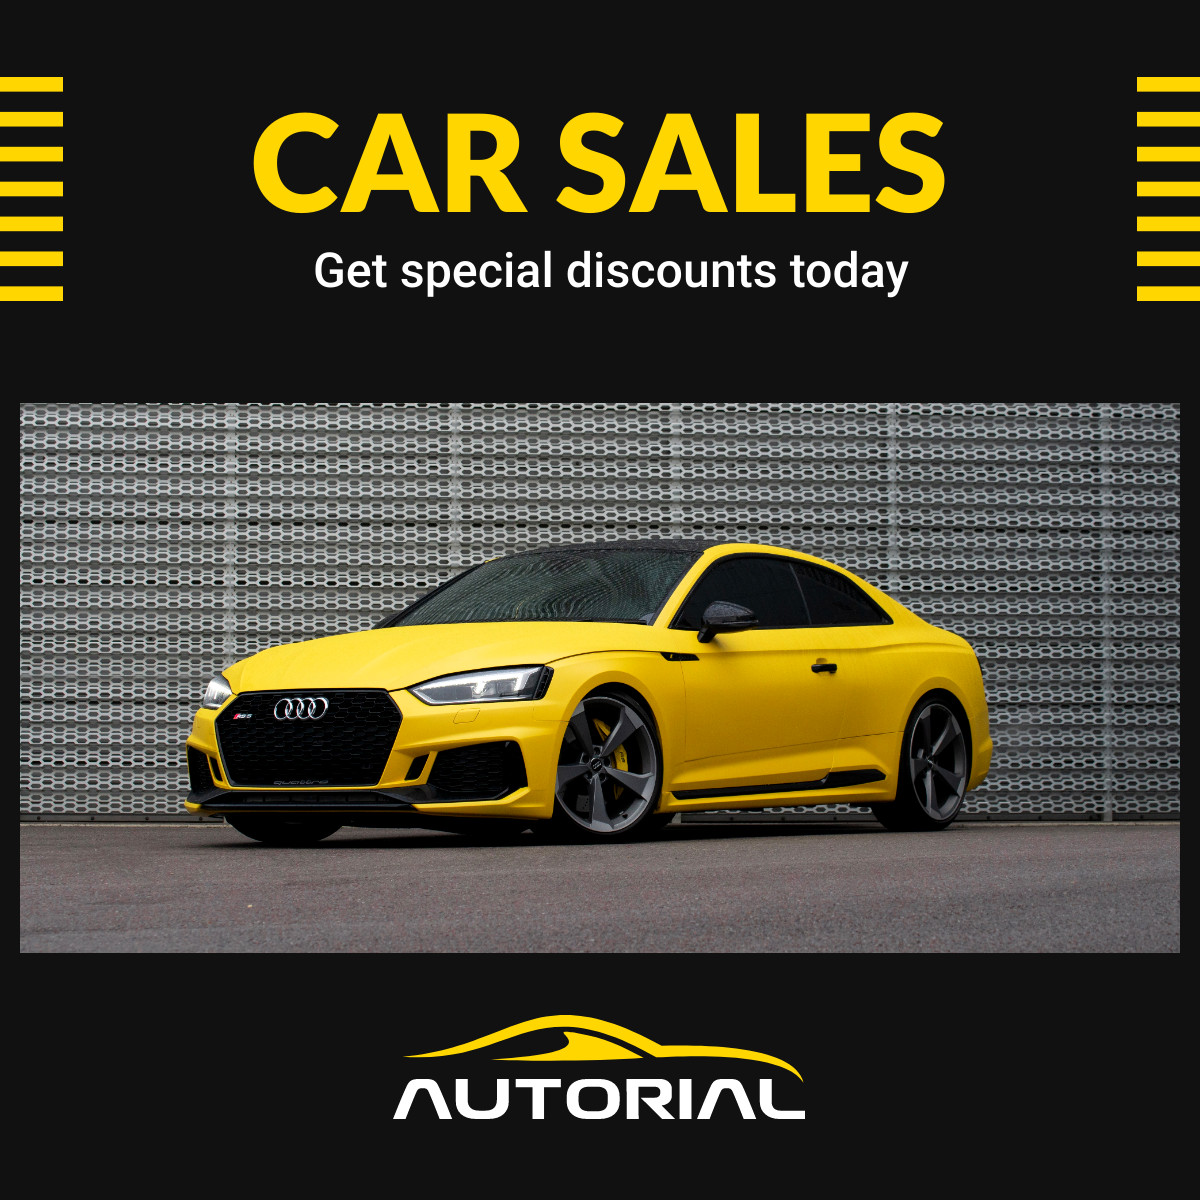 Special Car Sale Discounts Inline Rectangle 300x250